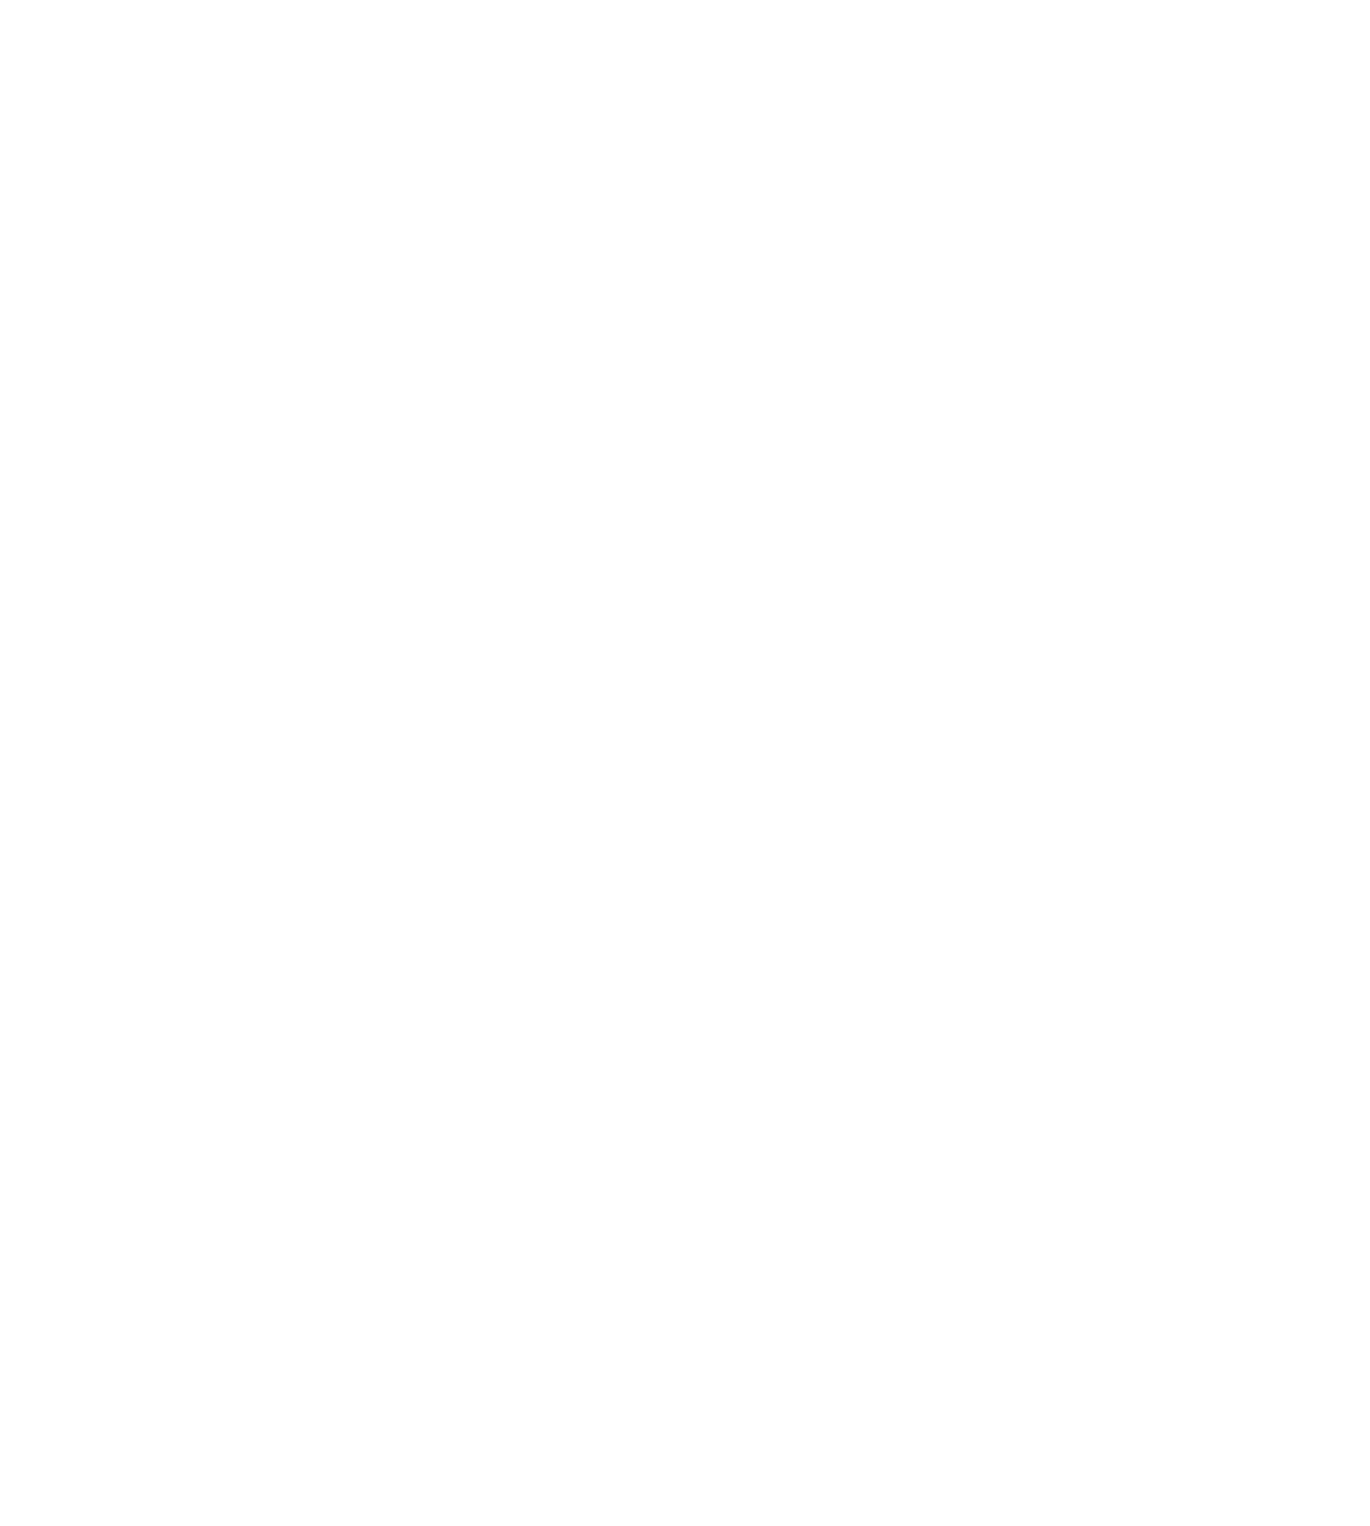 22 Benefits of Trees - TreePeople